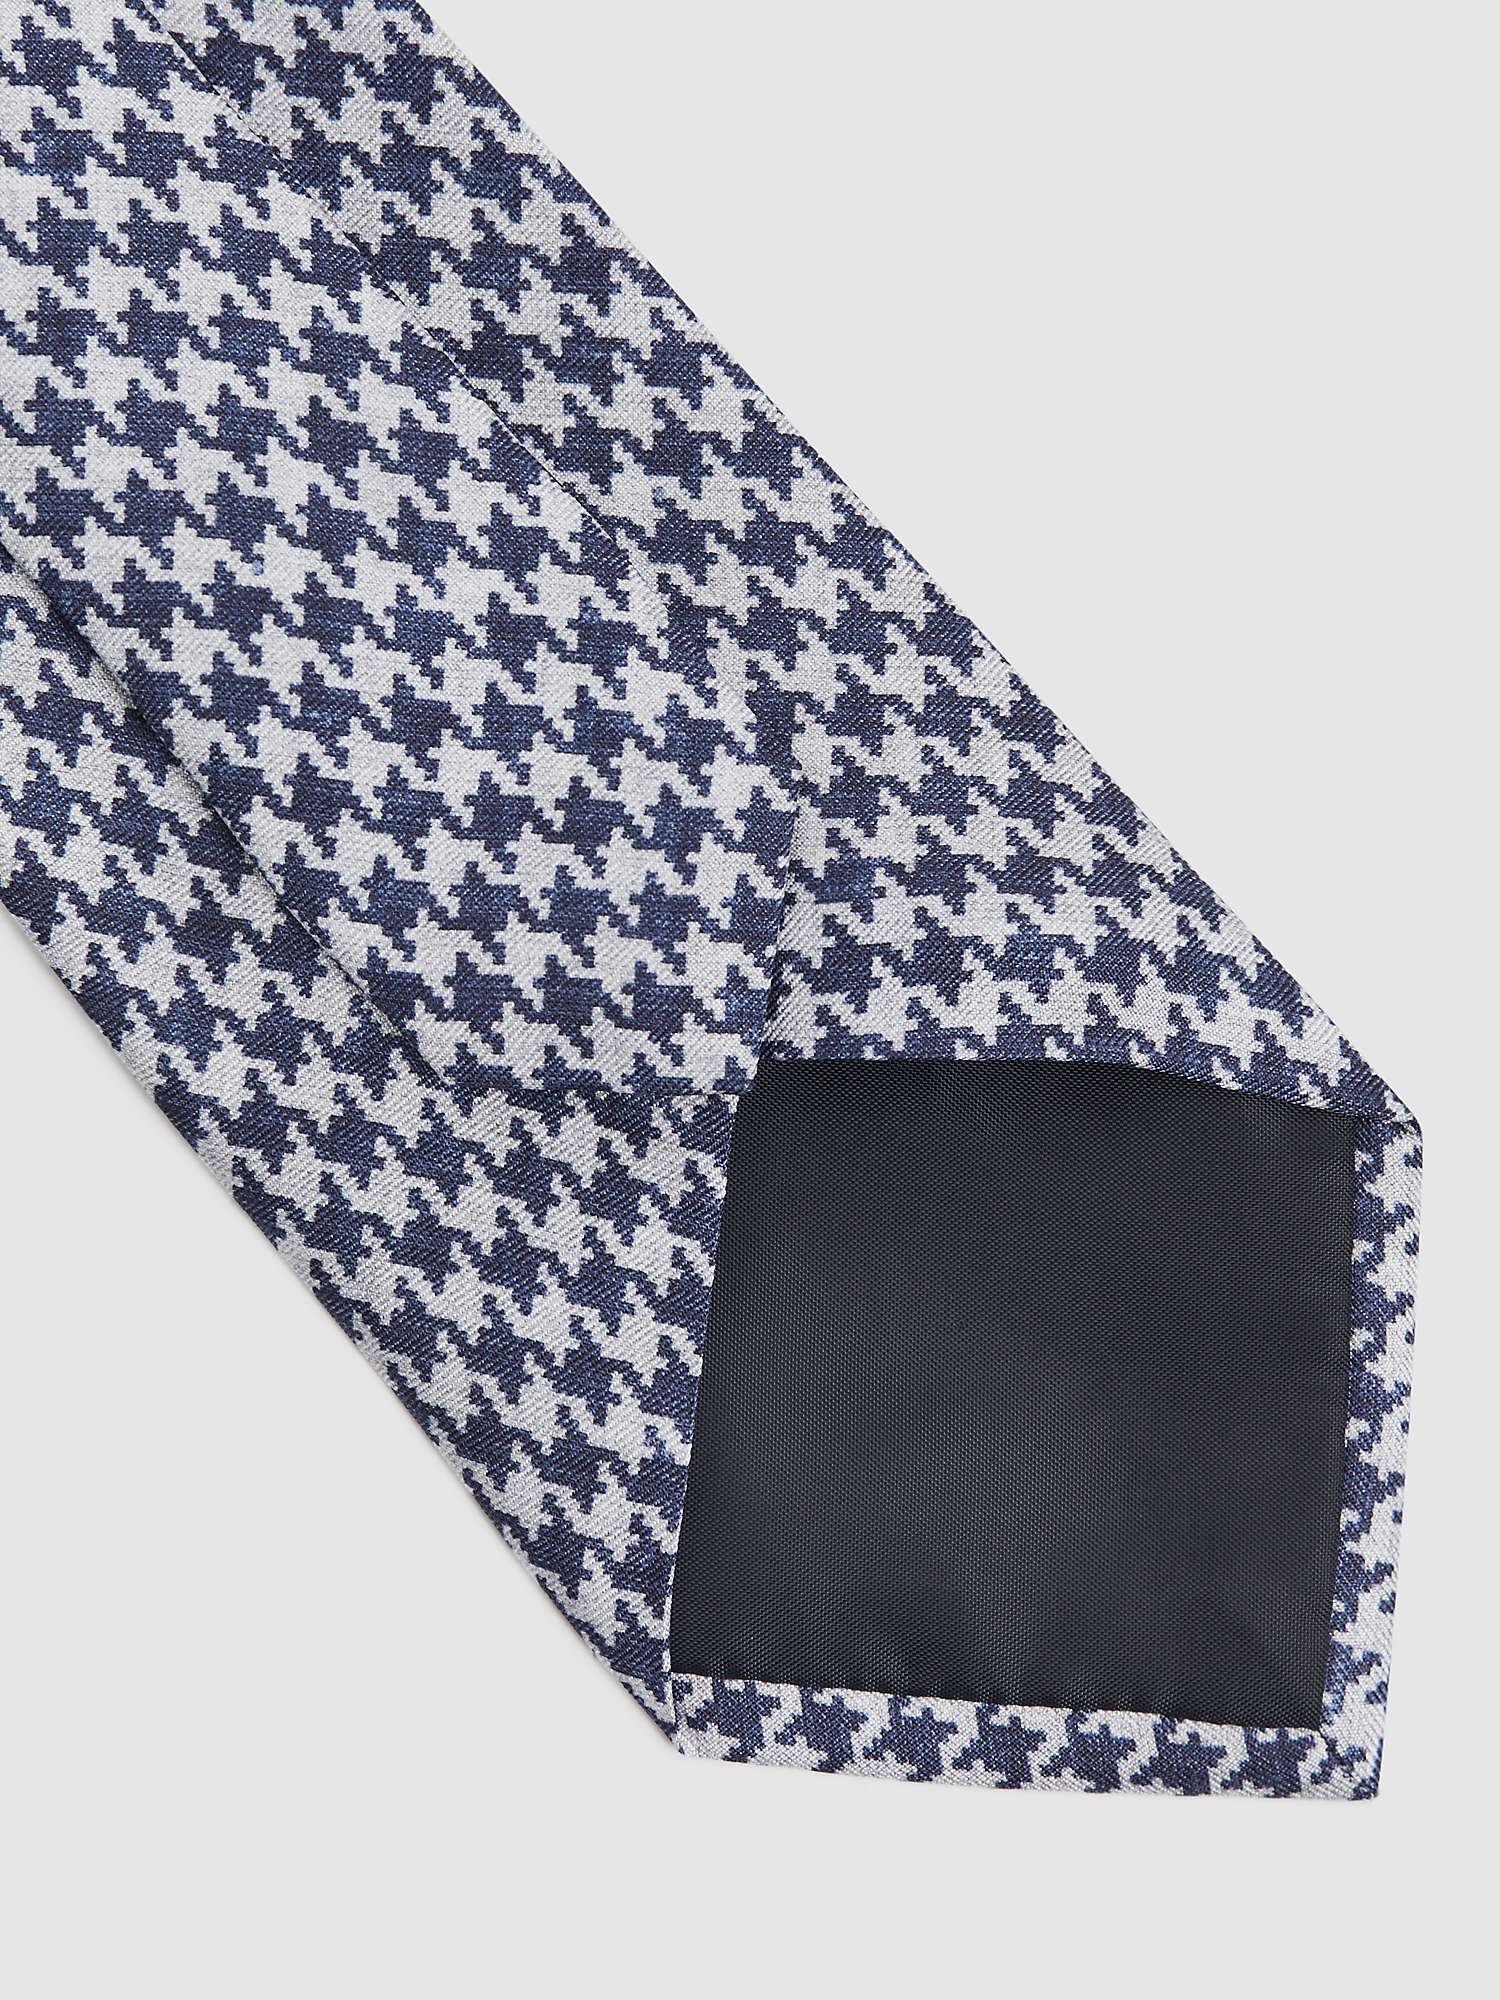 Buy Reiss Gesu Dogtooth Print Silk Tie, Blue/White Online at johnlewis.com